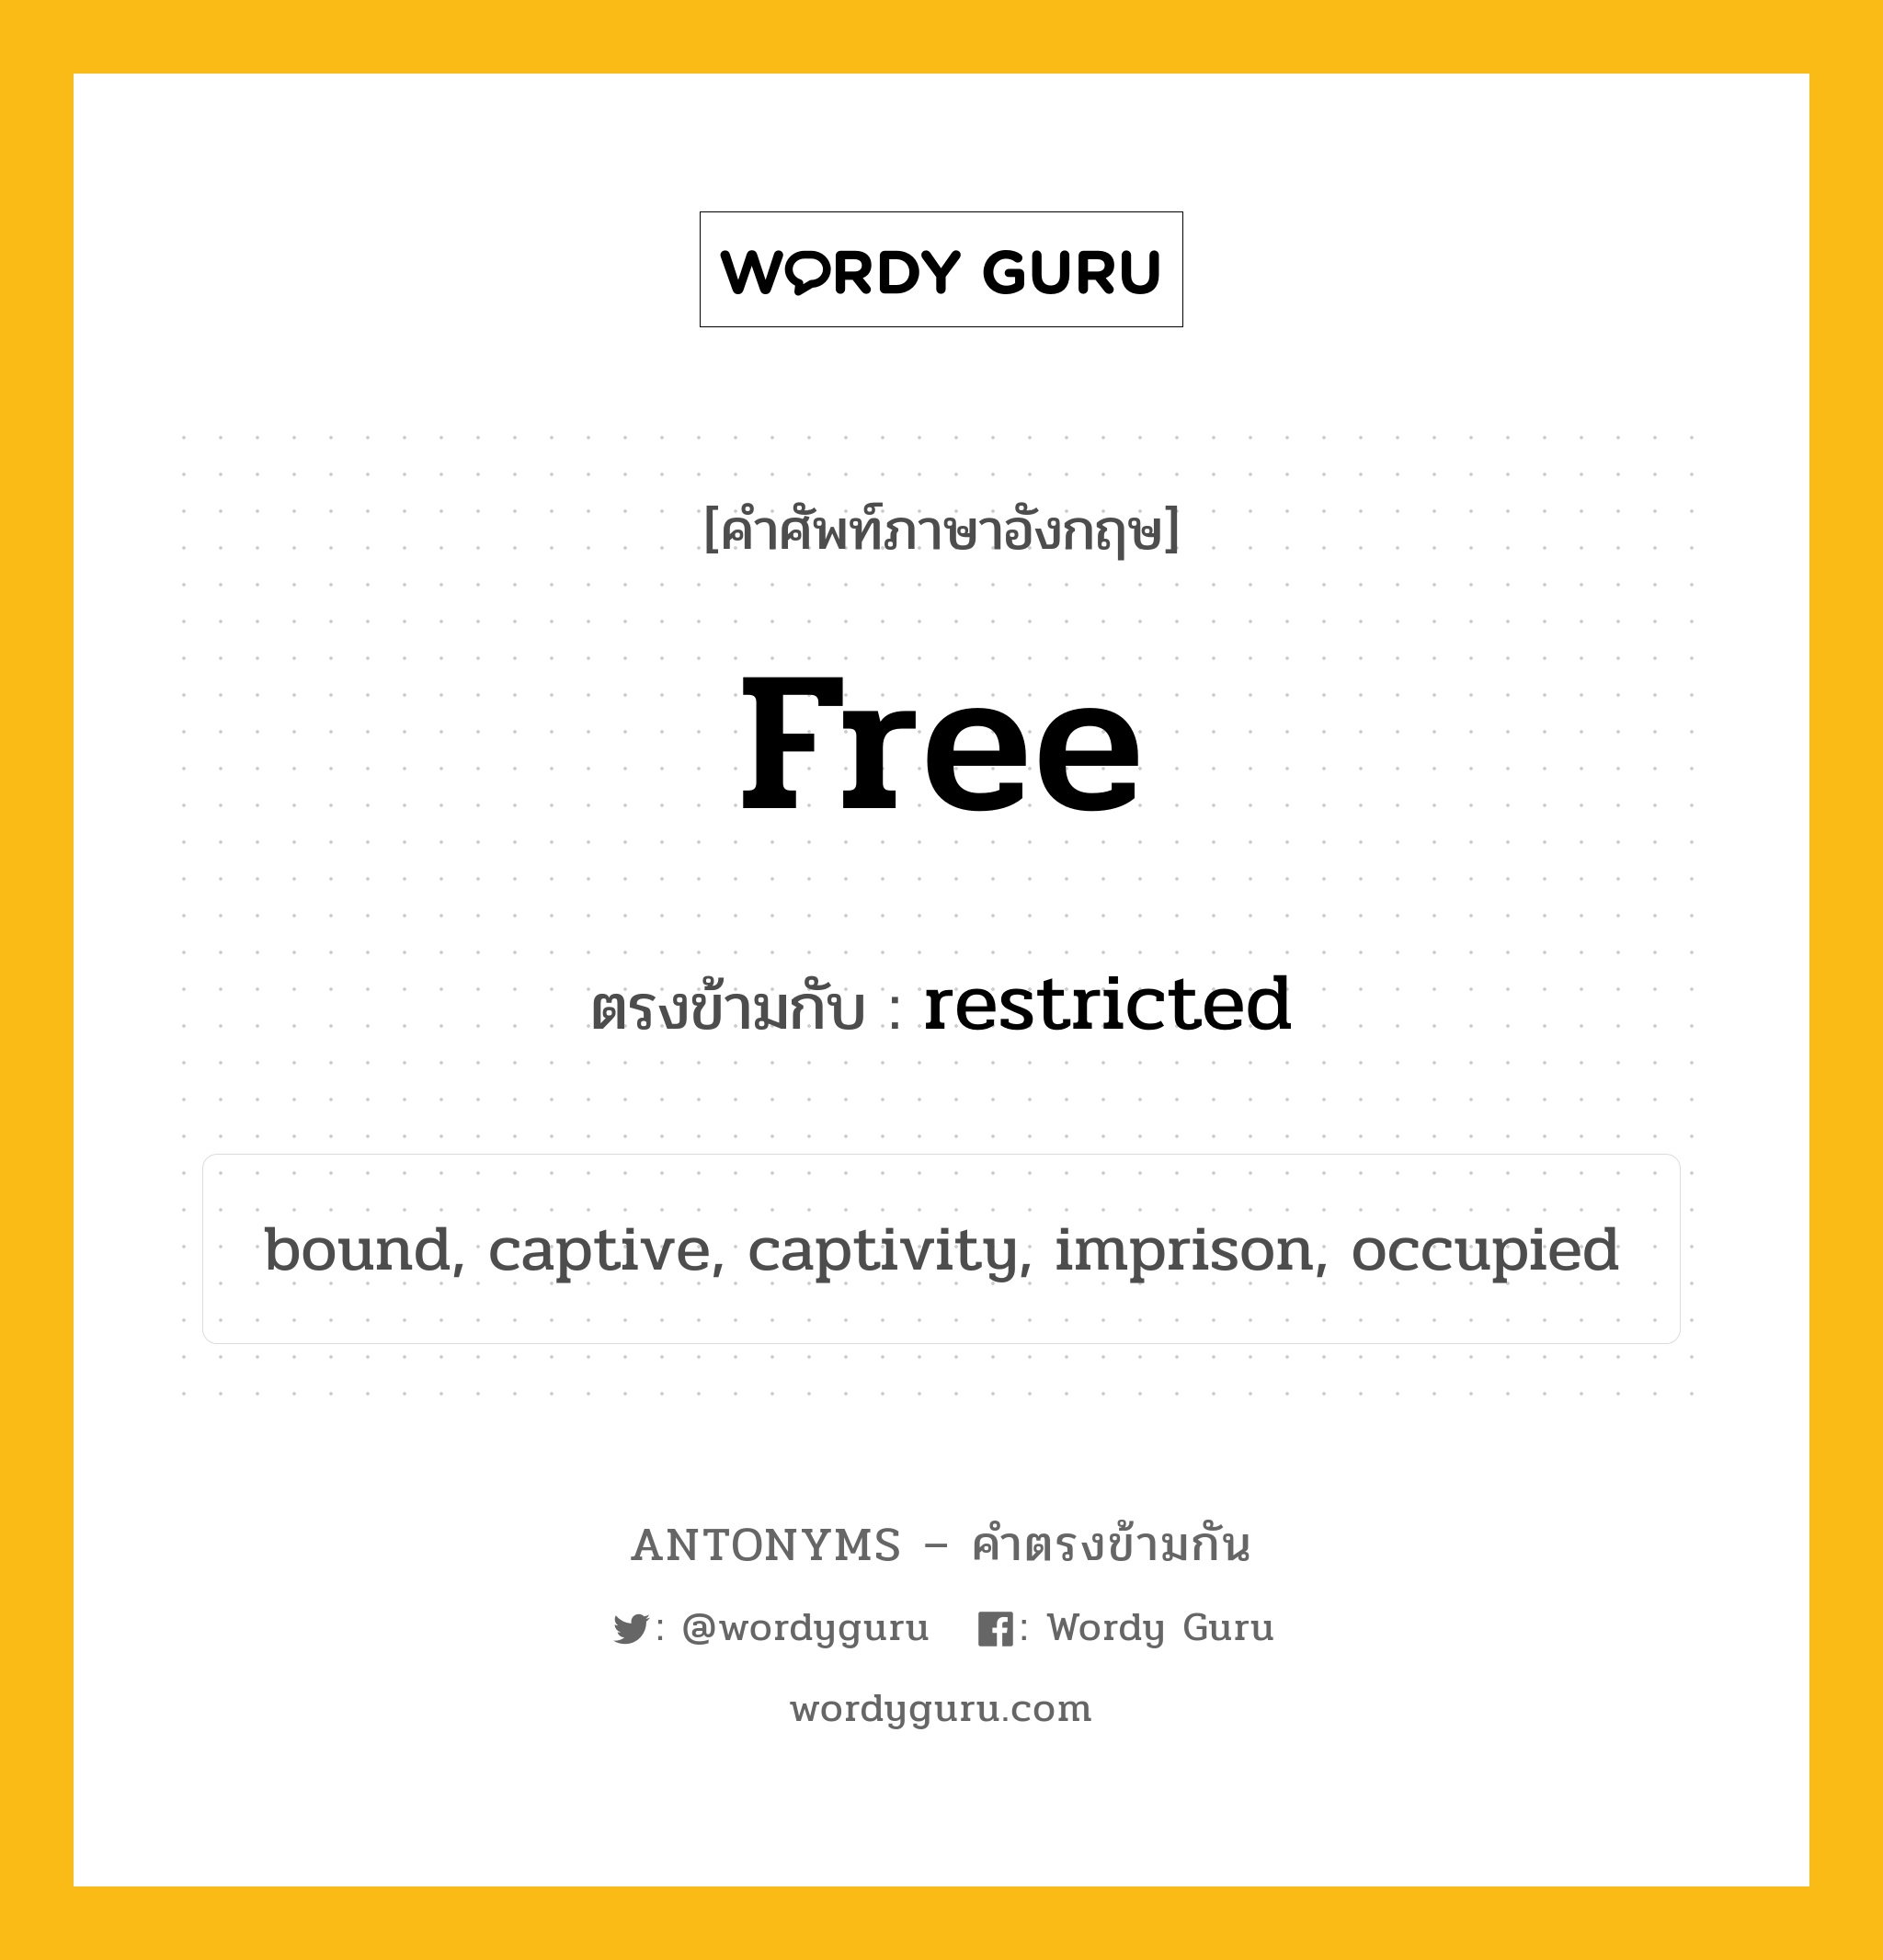 free เป็นคำตรงข้ามกับคำไหนบ้าง?, คำศัพท์ภาษาอังกฤษ free ตรงข้ามกับ restricted หมวด restricted